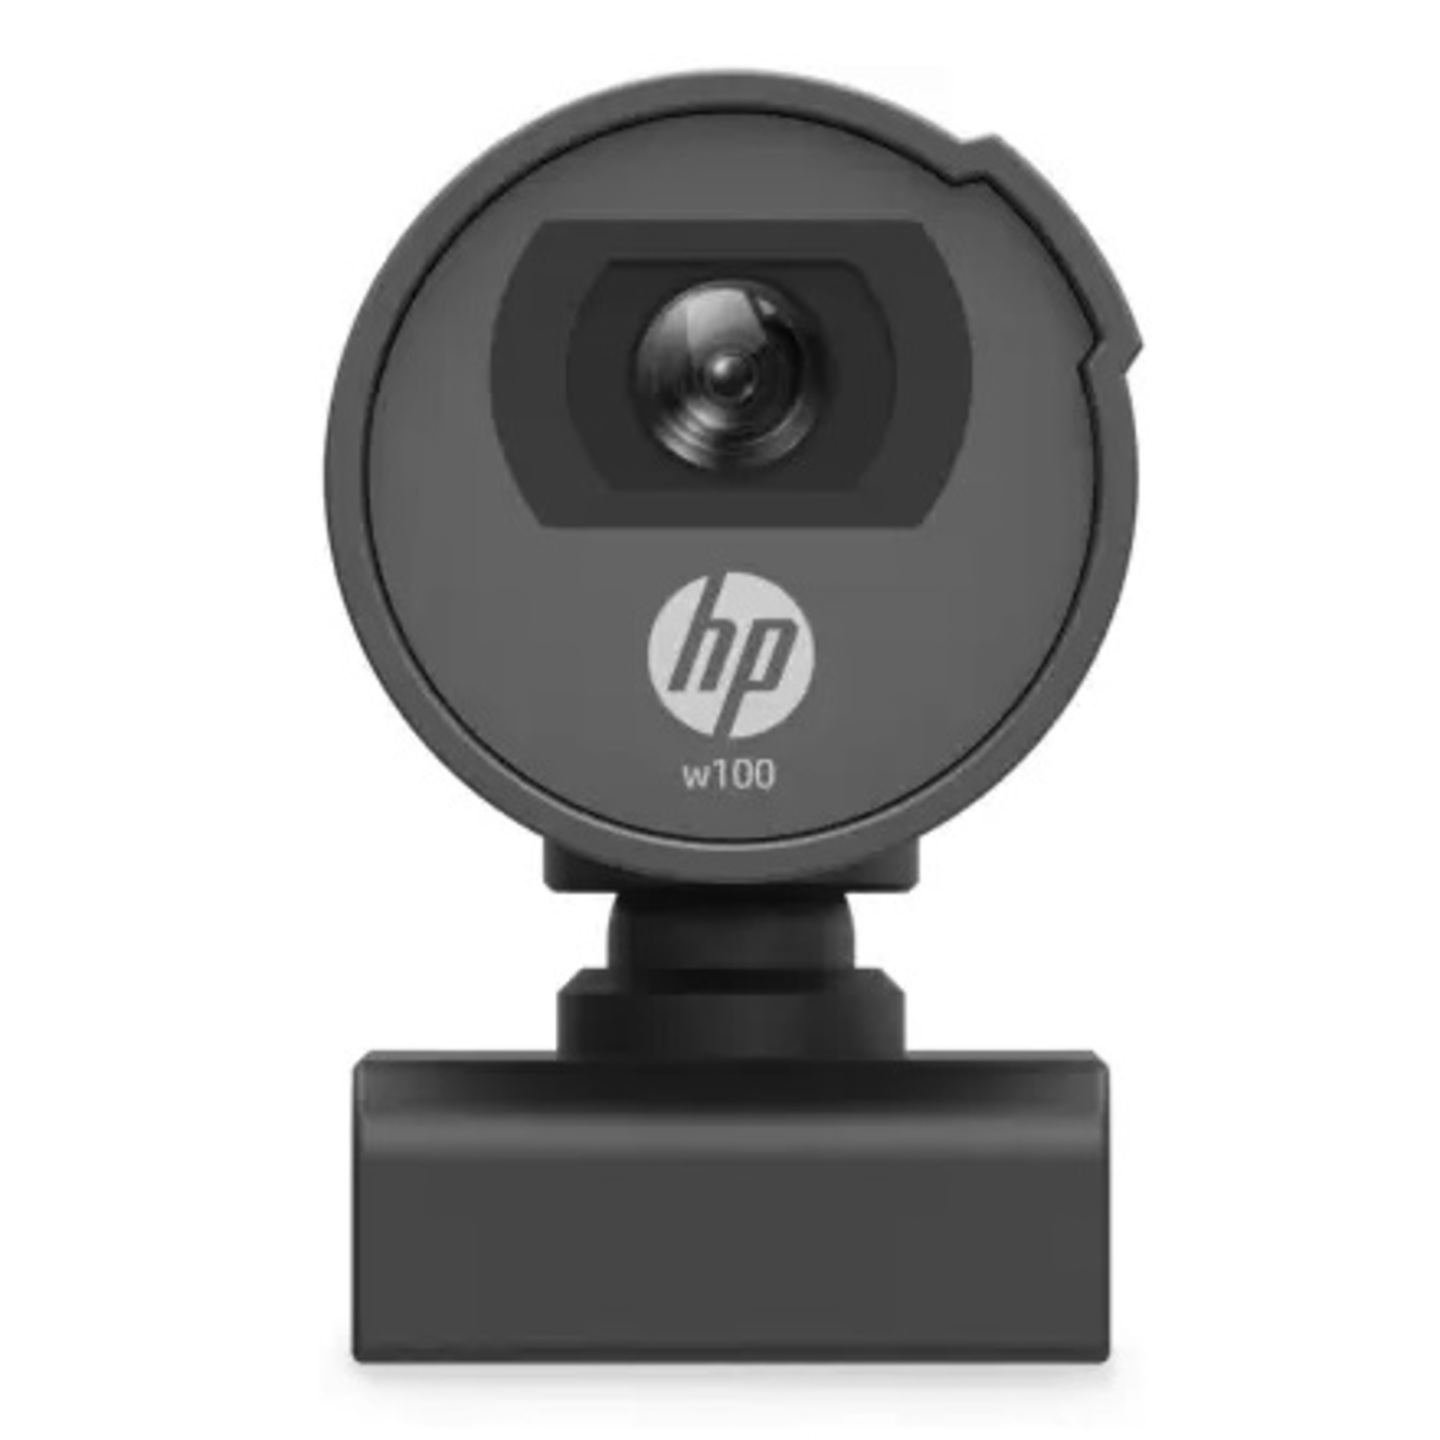 HP w100 Webcam